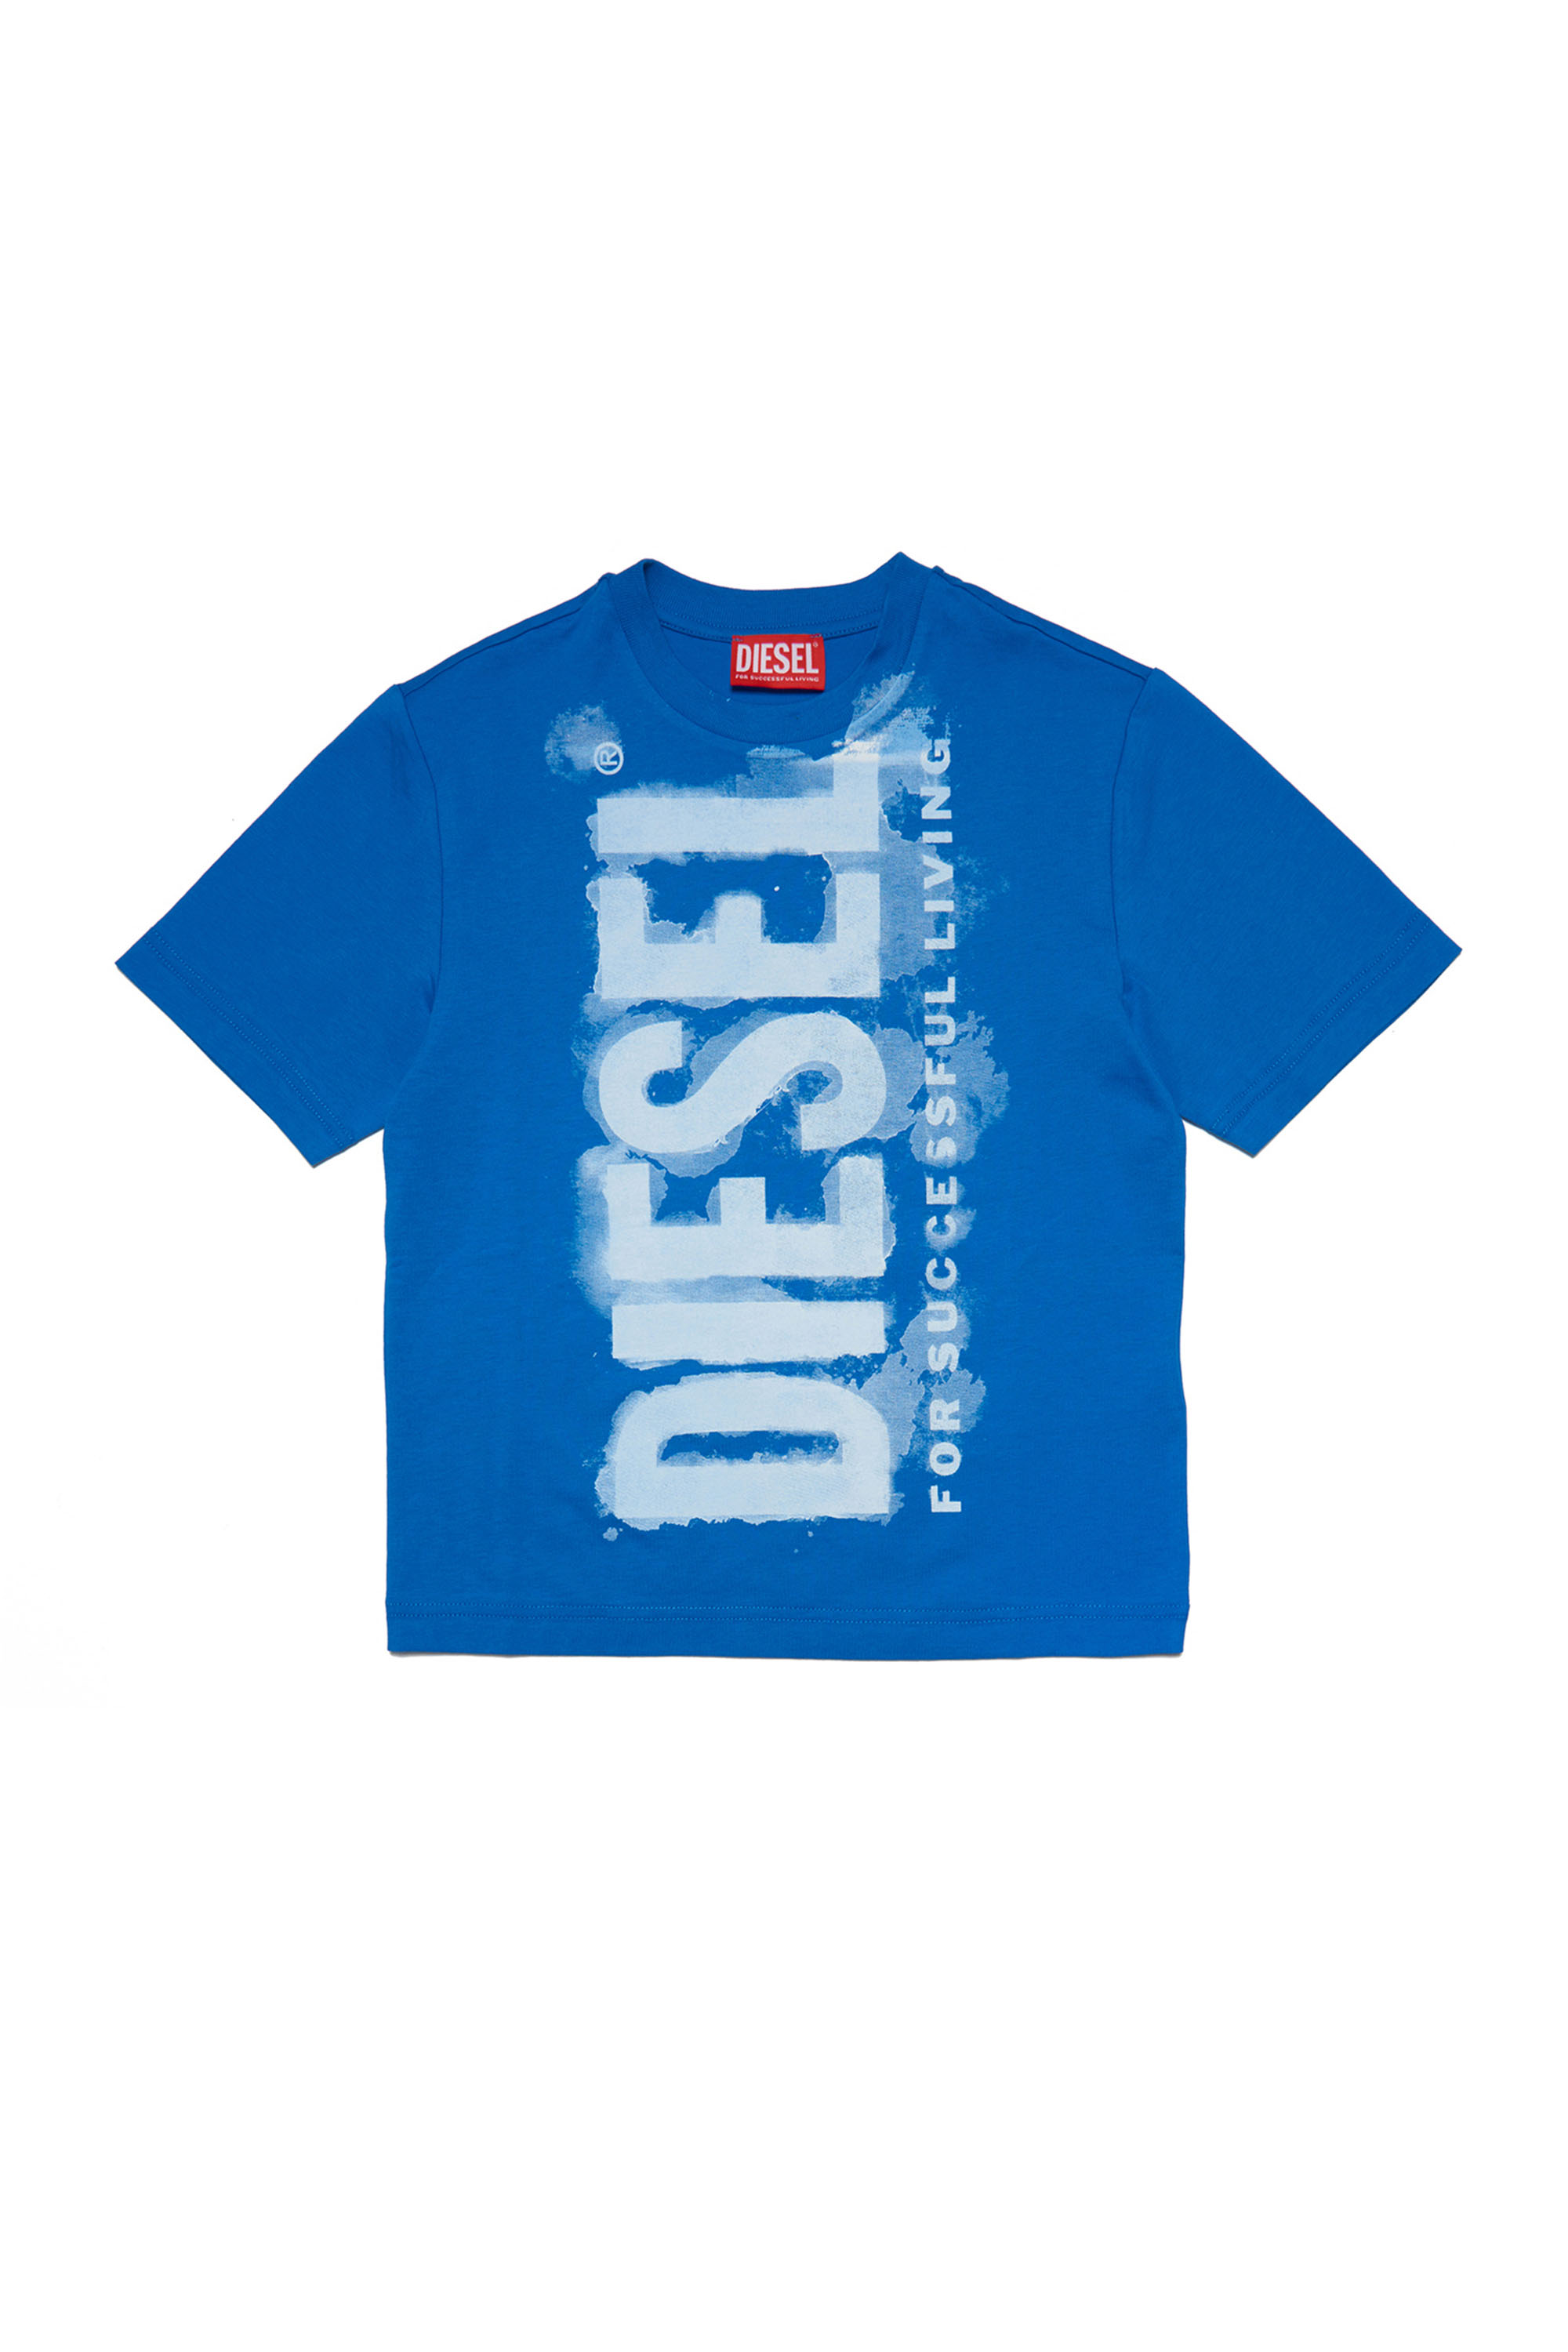 Diesel - TJUSTE16 OVER, Blau - Image 1